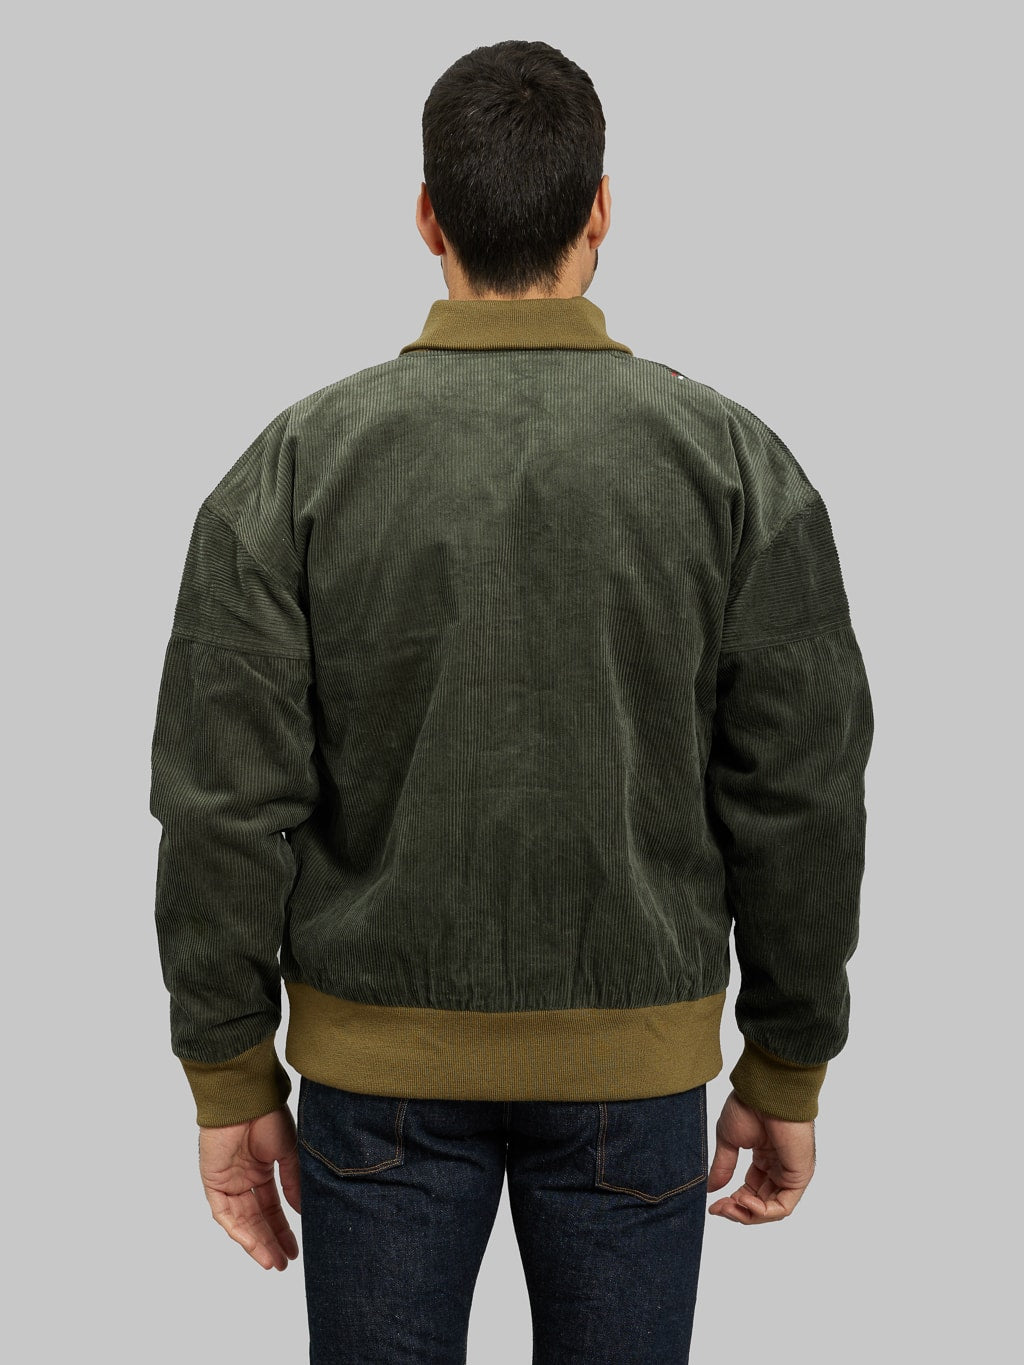 Tanuki Sazanami Corduroy Bayberry Dyed Green Jacket model back fit